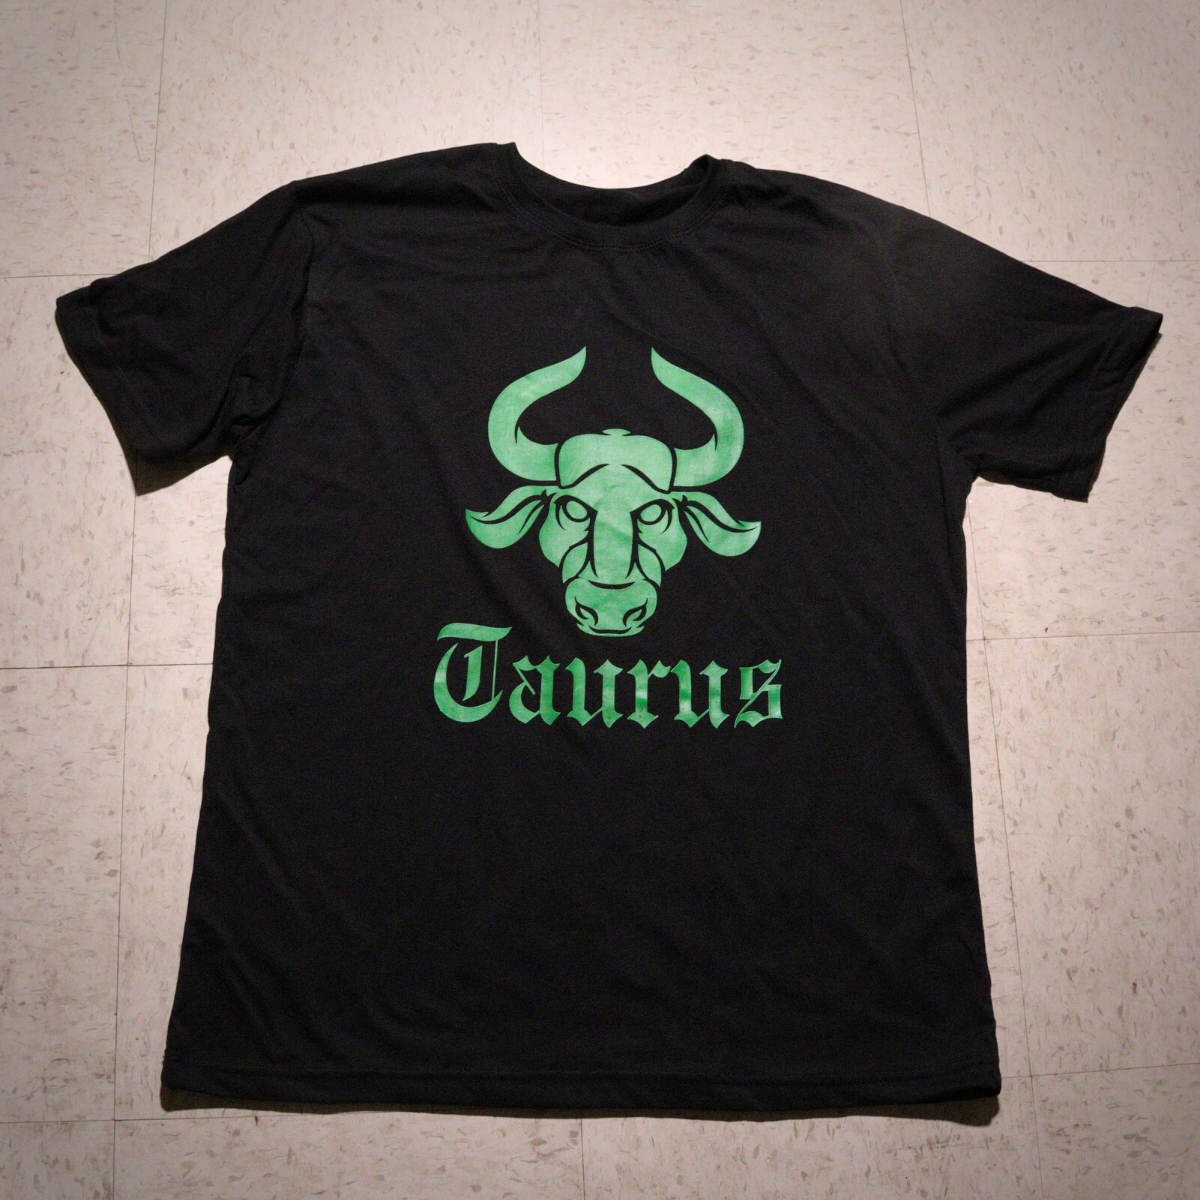 Taurus - Black & Green T-Shirt